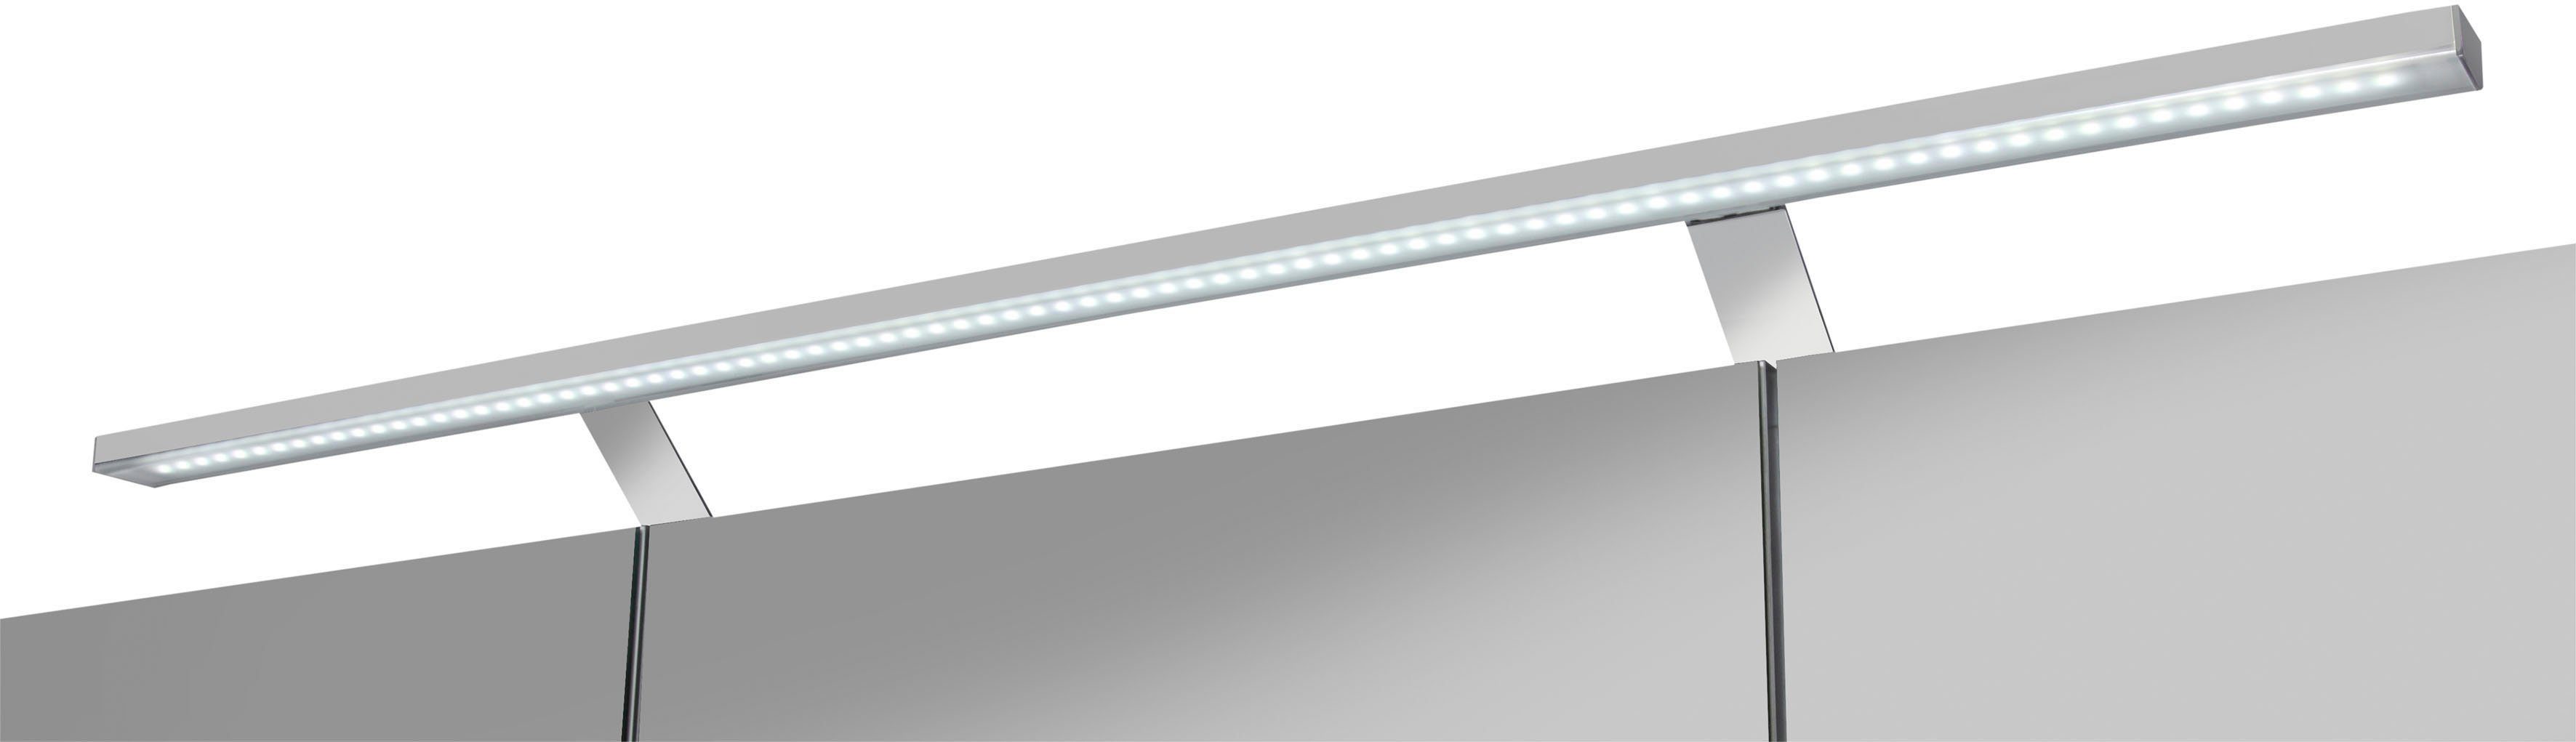 welltime Spiegelschrank | Torino cm, 100 LED-Beleuchtung, Schalter-/Steckdosenbox Breite basaltgrau basaltgrau 3-türig